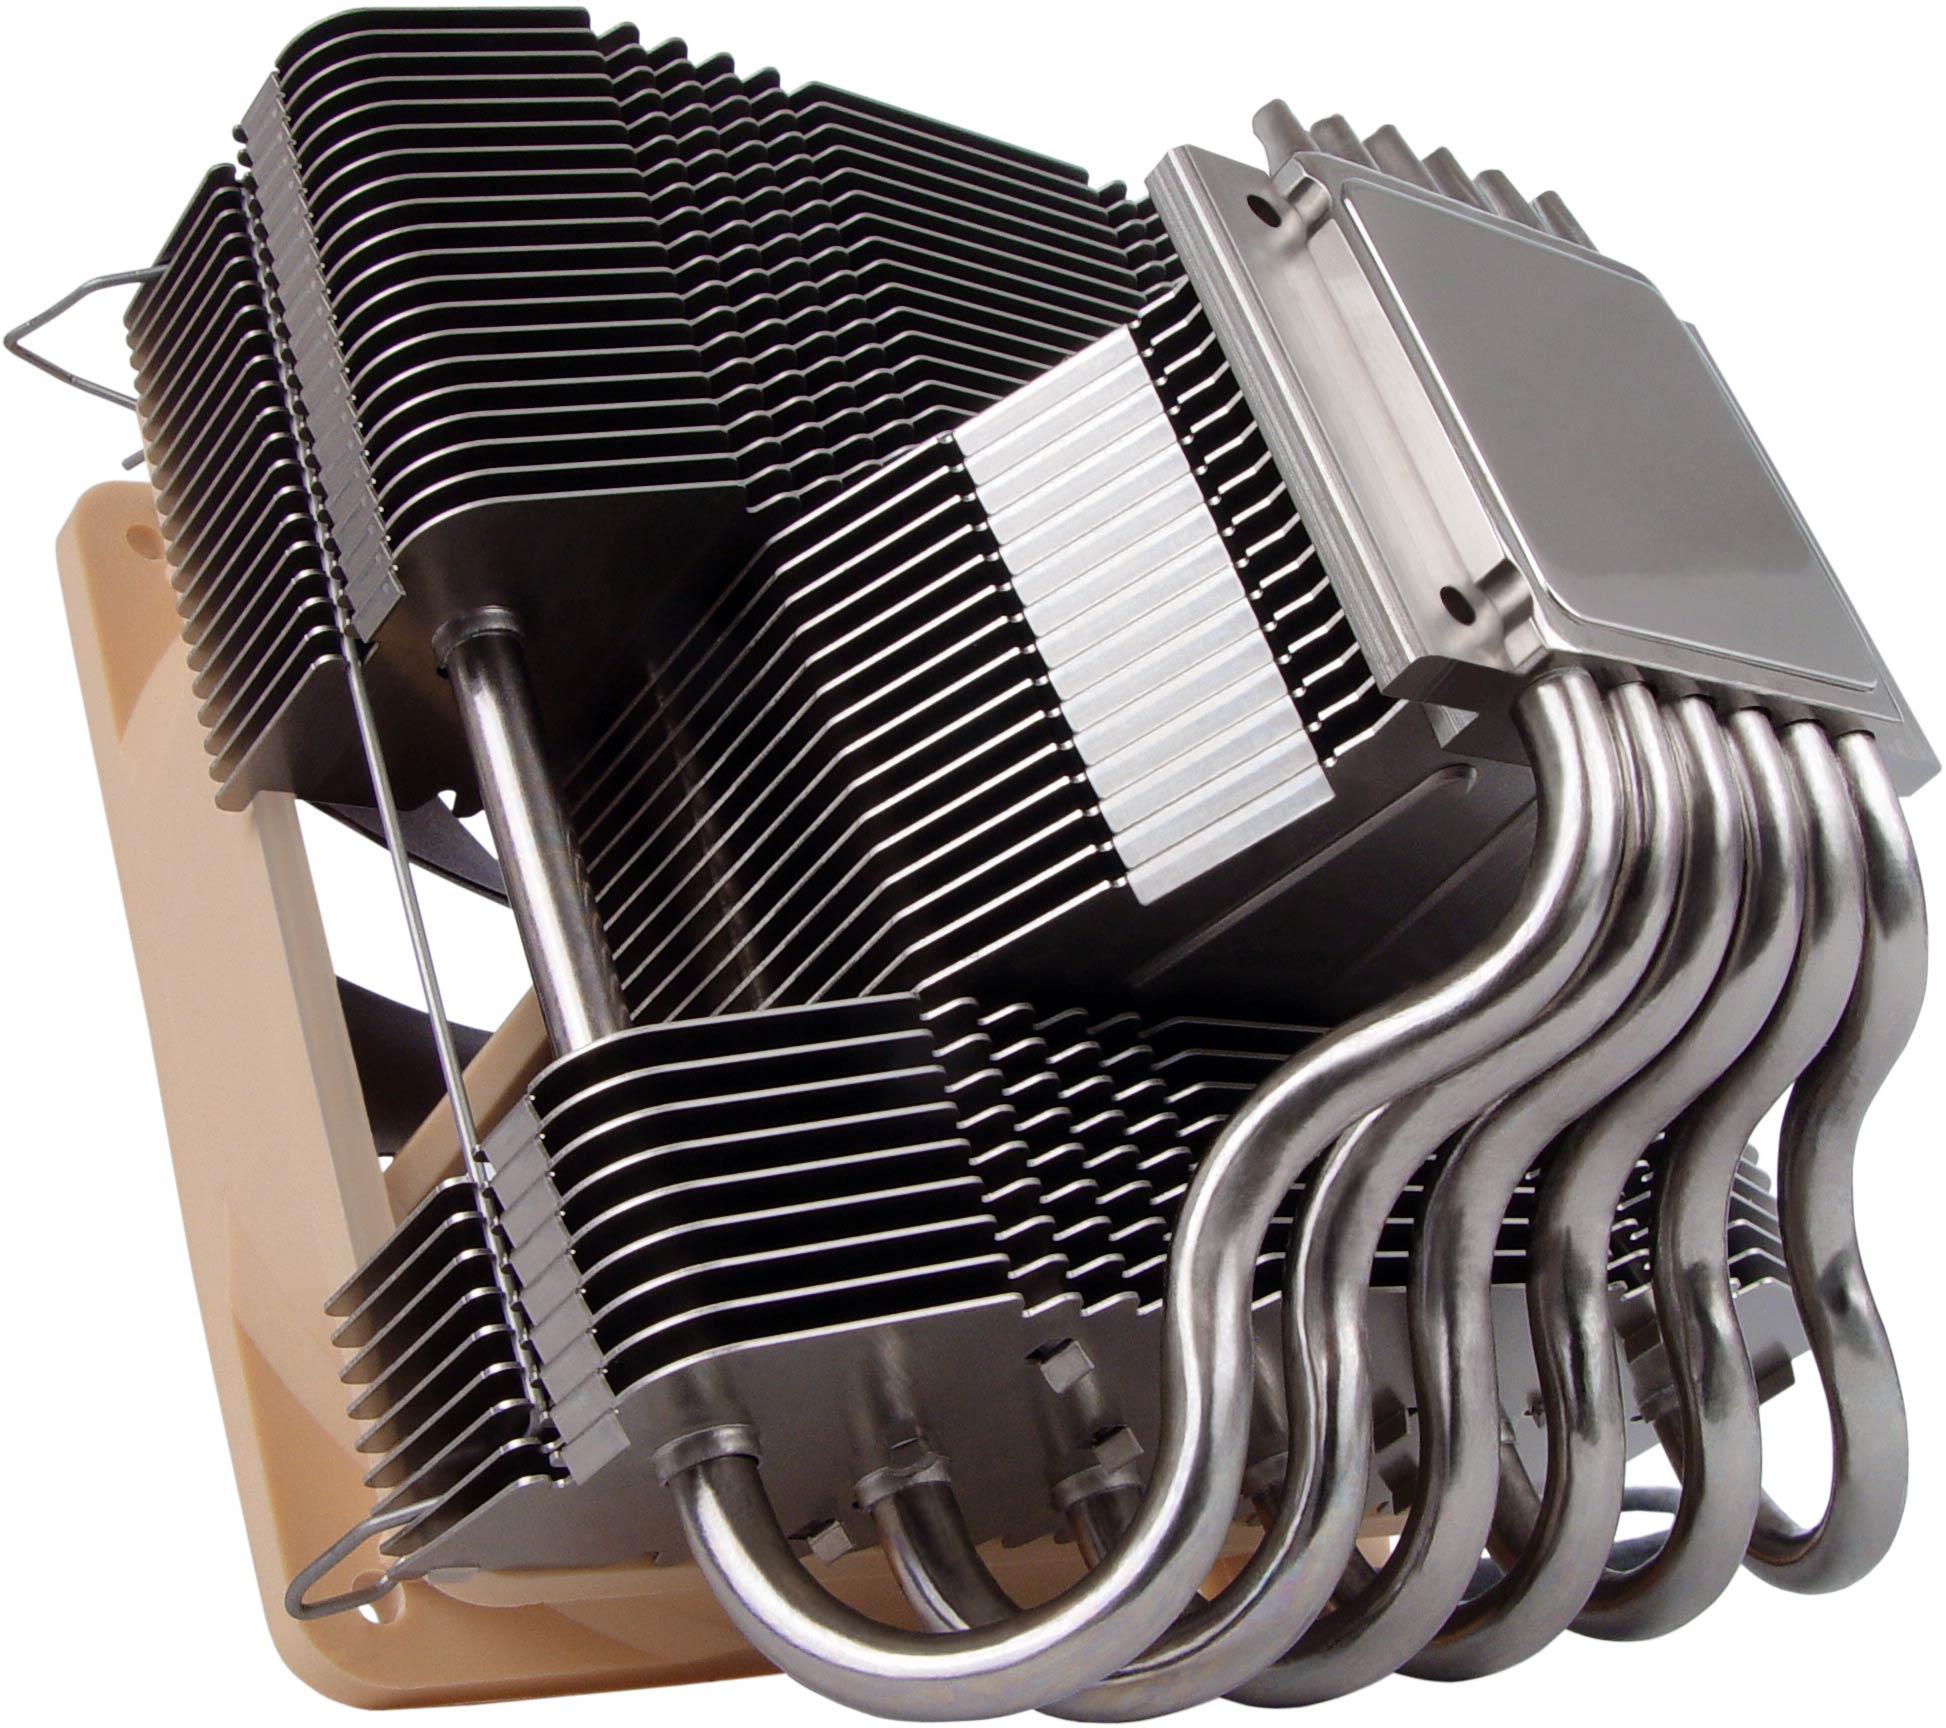 NH-C12P Top-Down CPU Heatpipe Heatsink with NF-P12 Fan